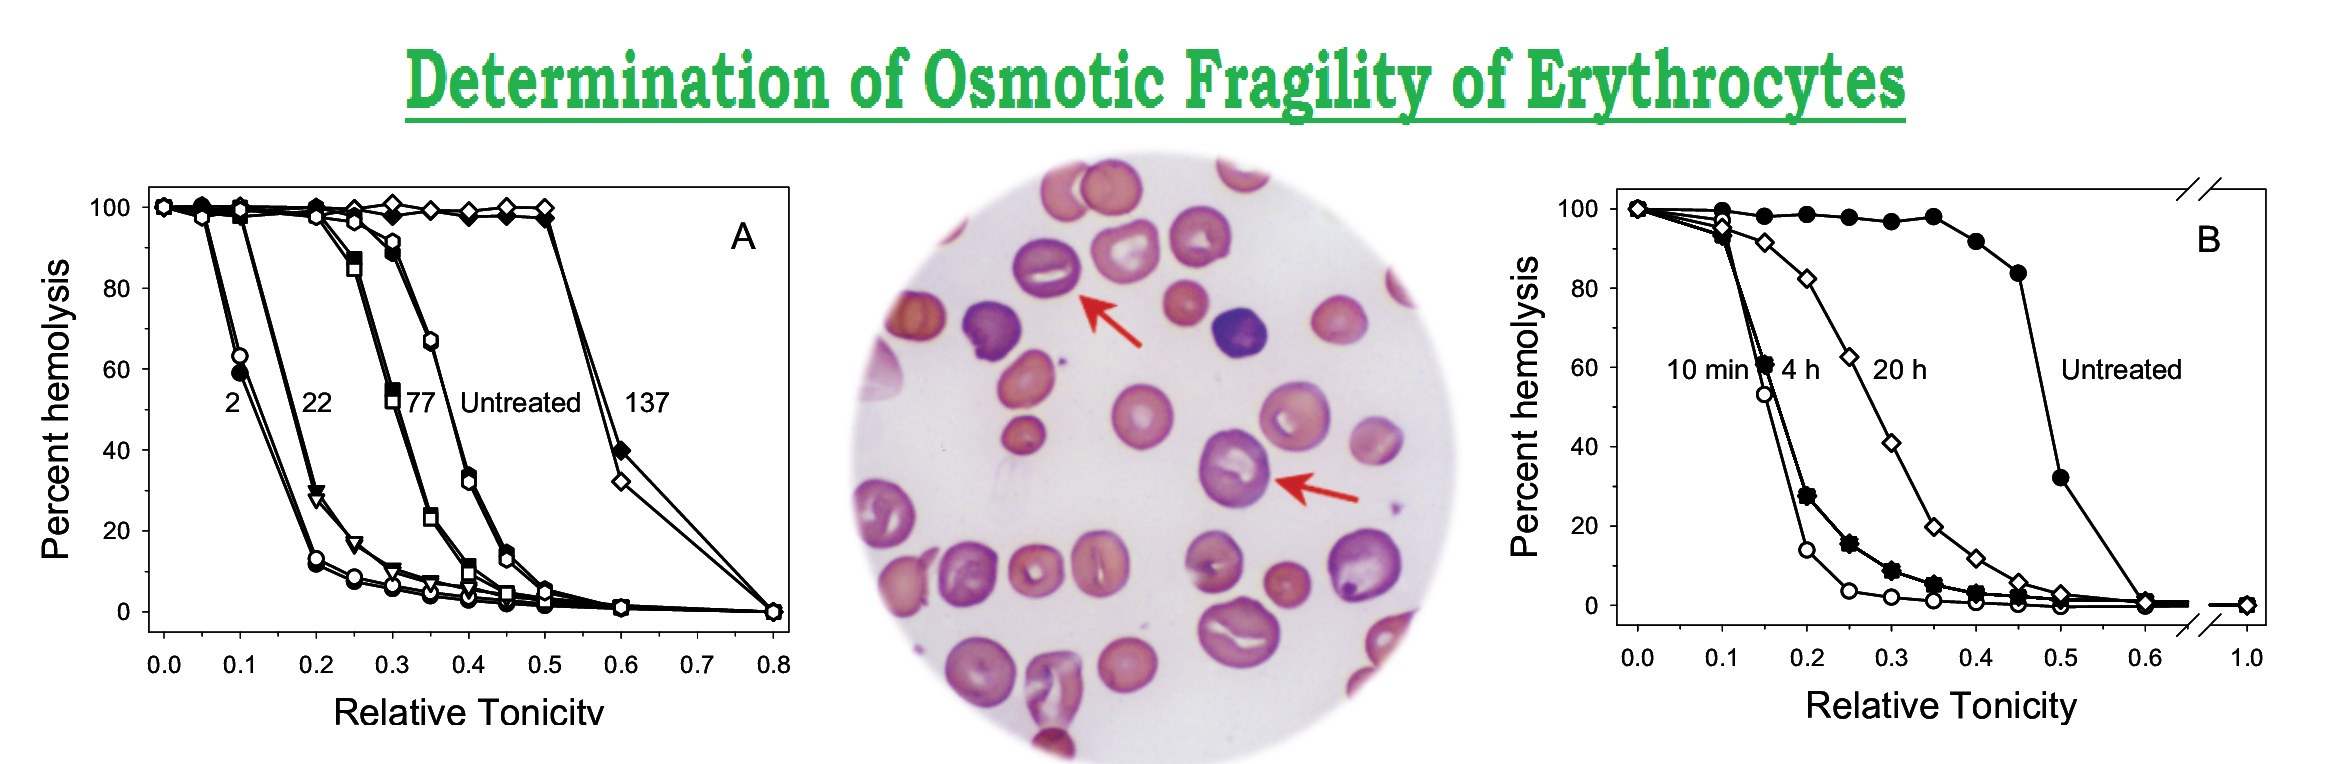 Osmotic Fragility of Erythrocytes 4.8 (2798)